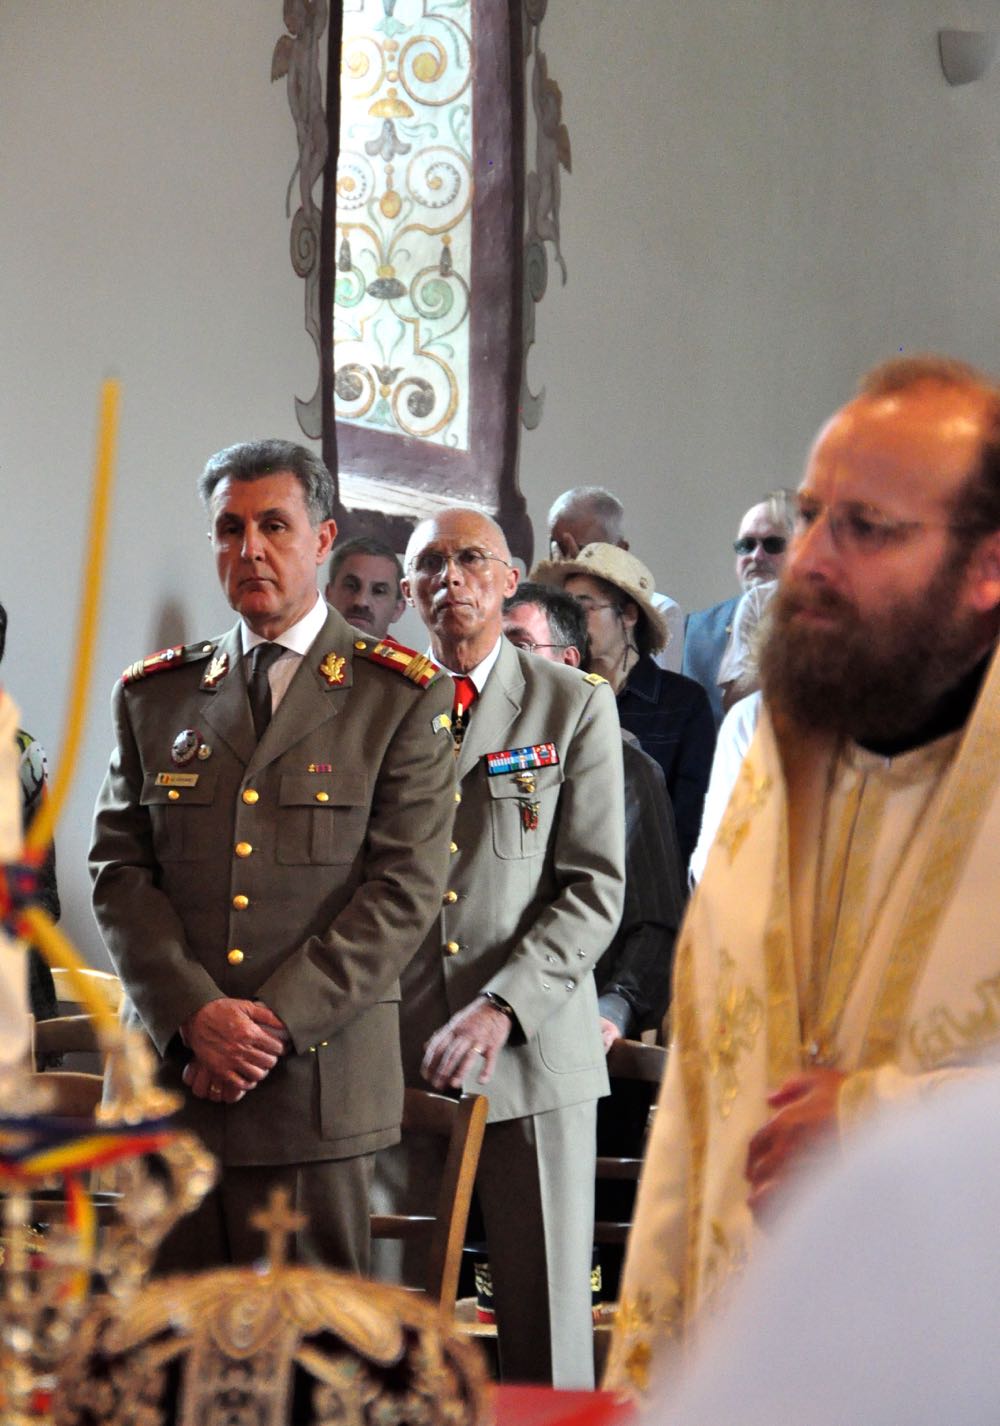 Ceremonia de omagiere a soldatilor romani ingropati la Soultzmatt in Primul Razboi Mondial, Principele Radu, 3 iunie 2017